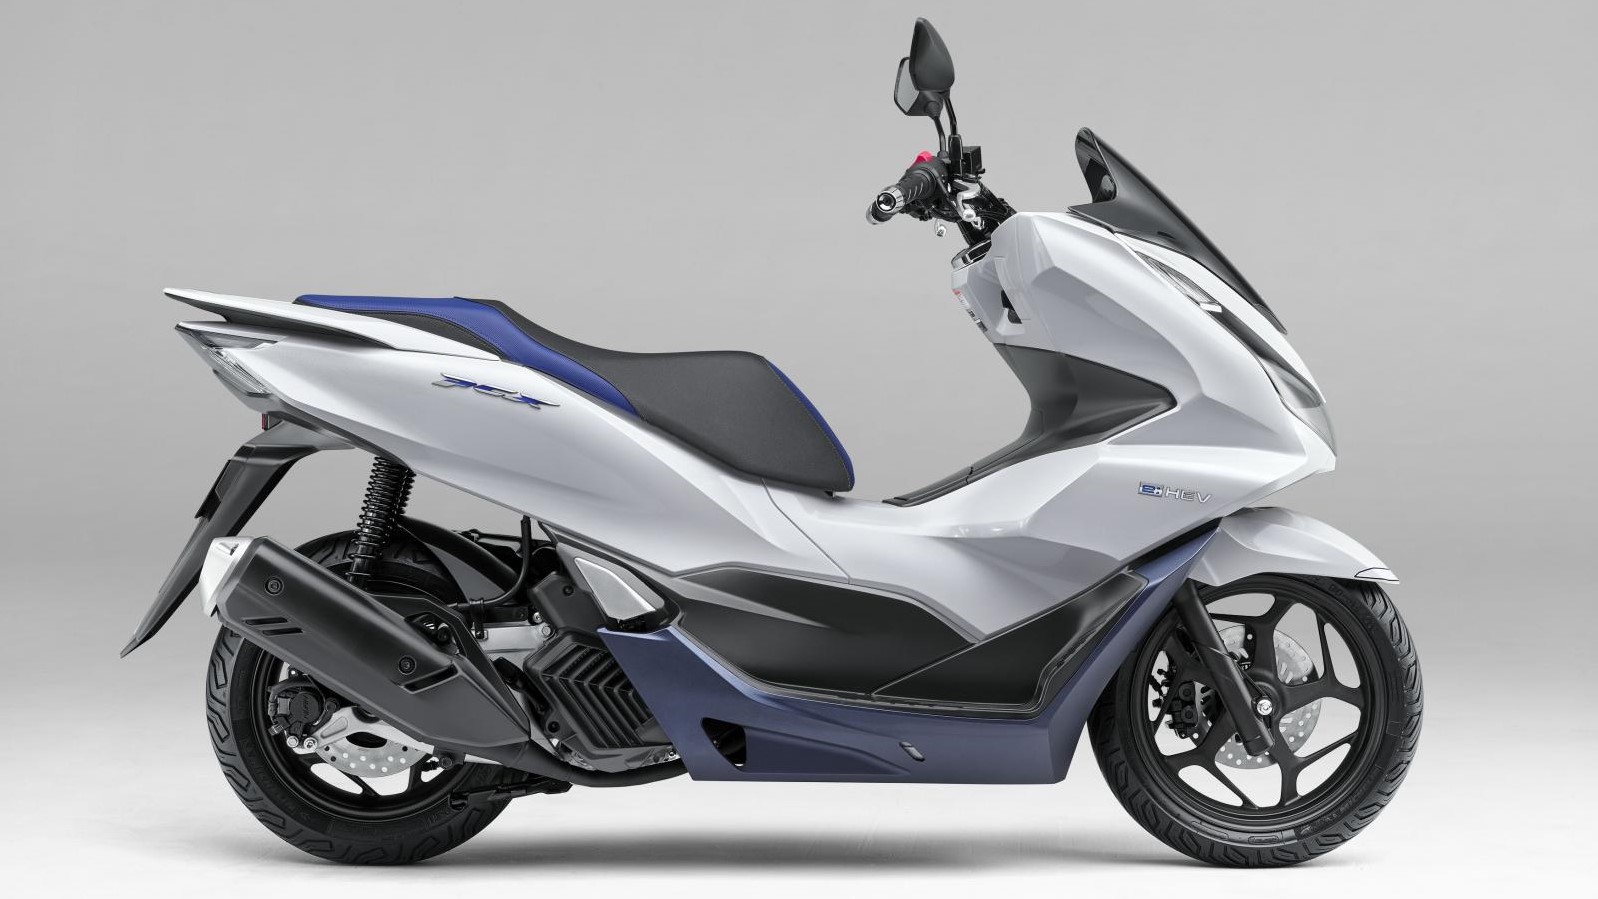 Honda Electric Moped Coming